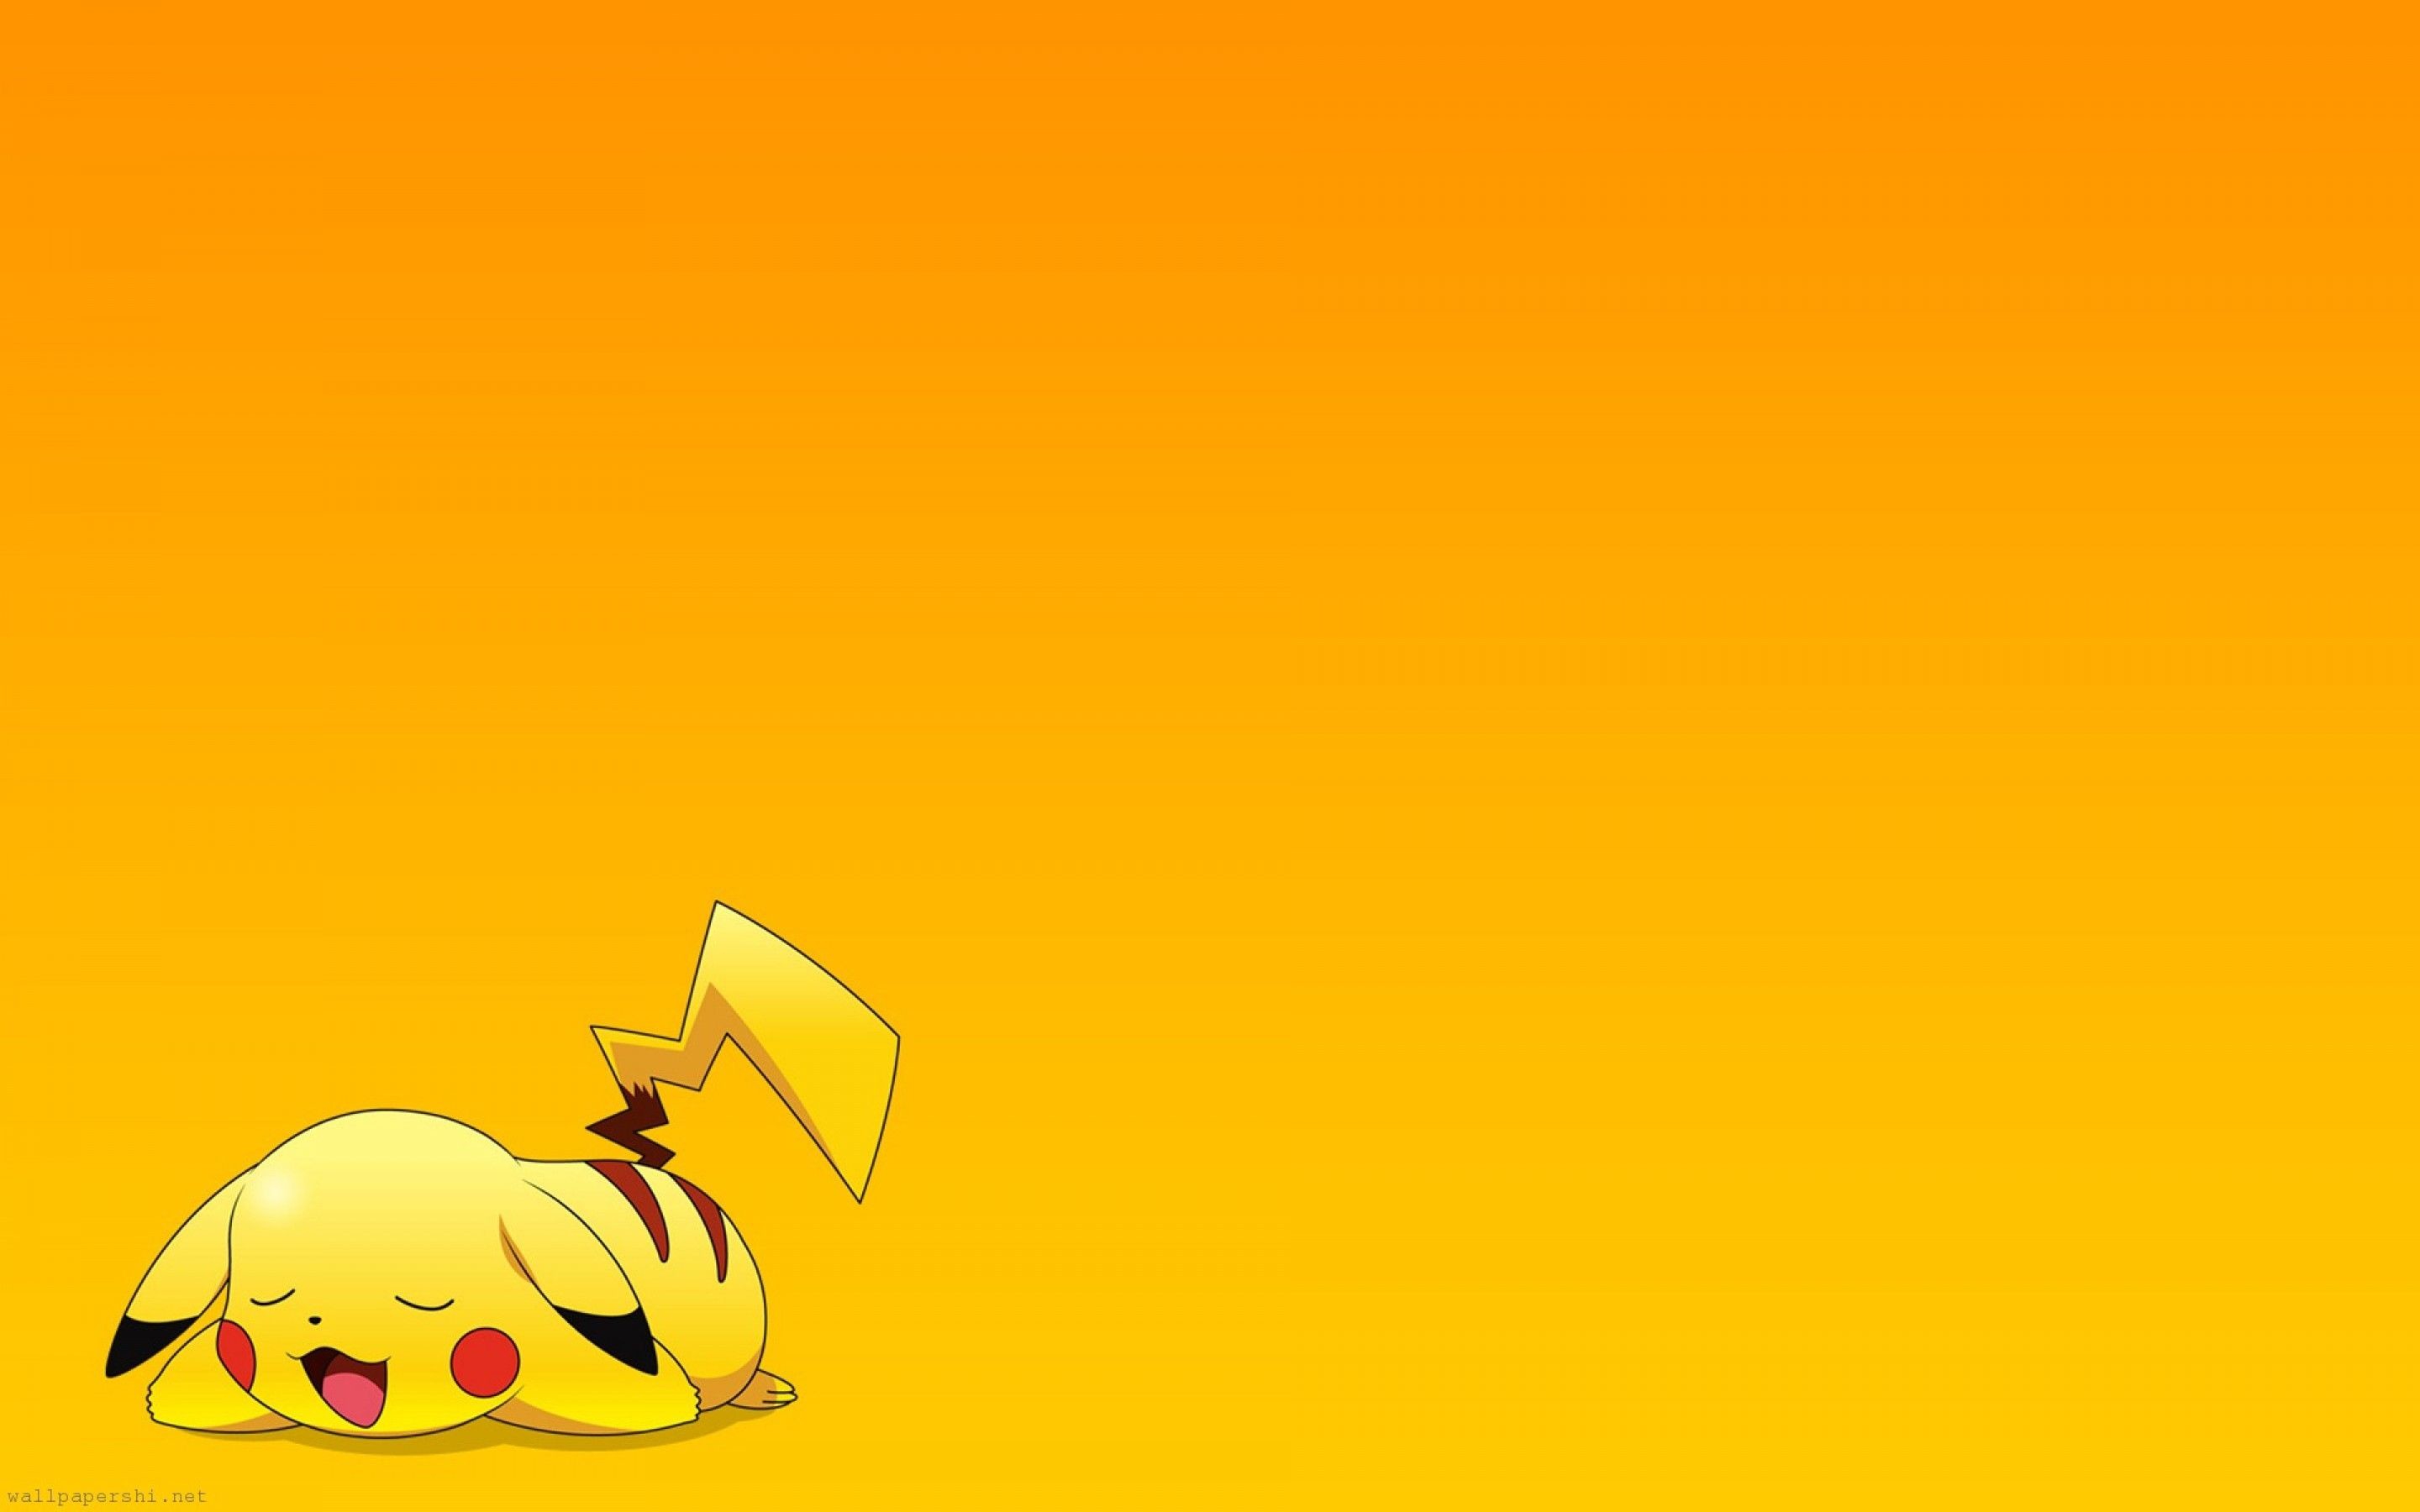 2880x1800 Pokemon Pikachu Wallpapers - Full HD wallpaper search